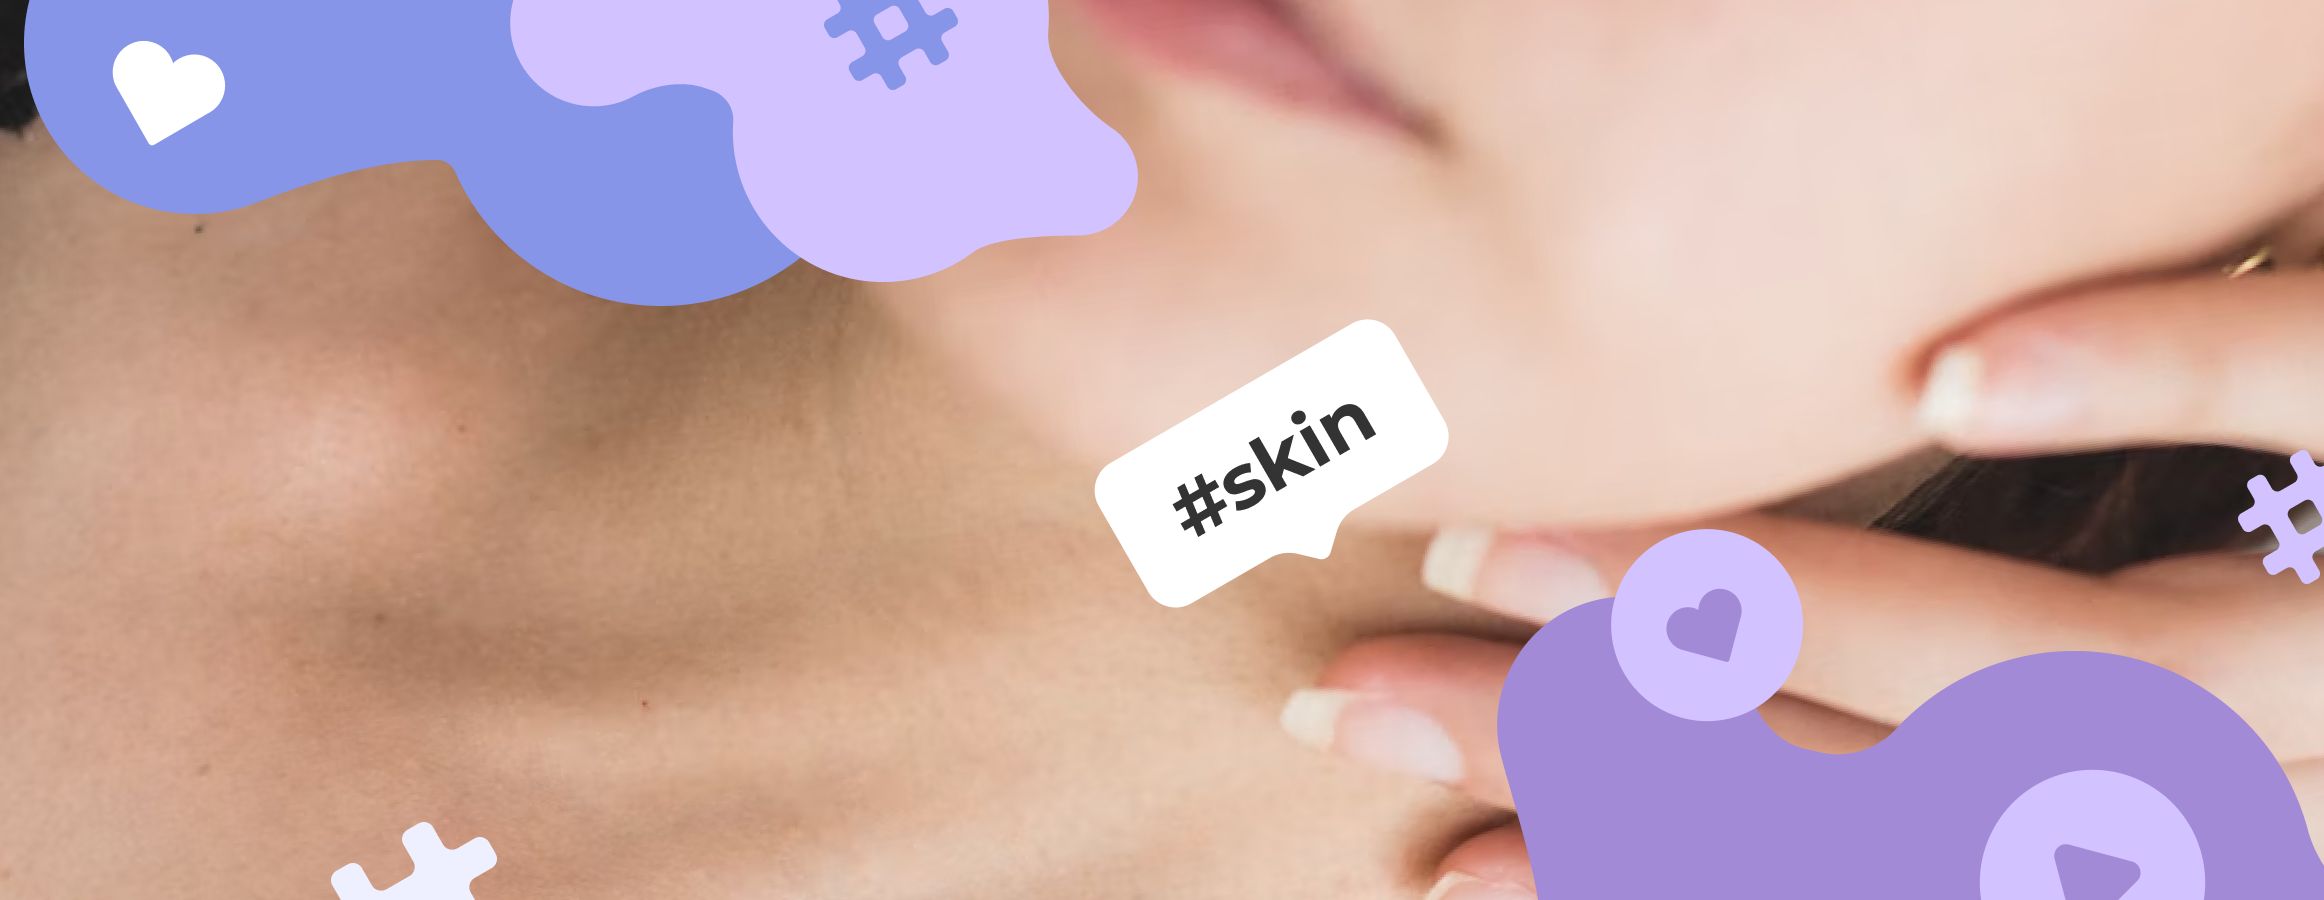 Skin hashtags